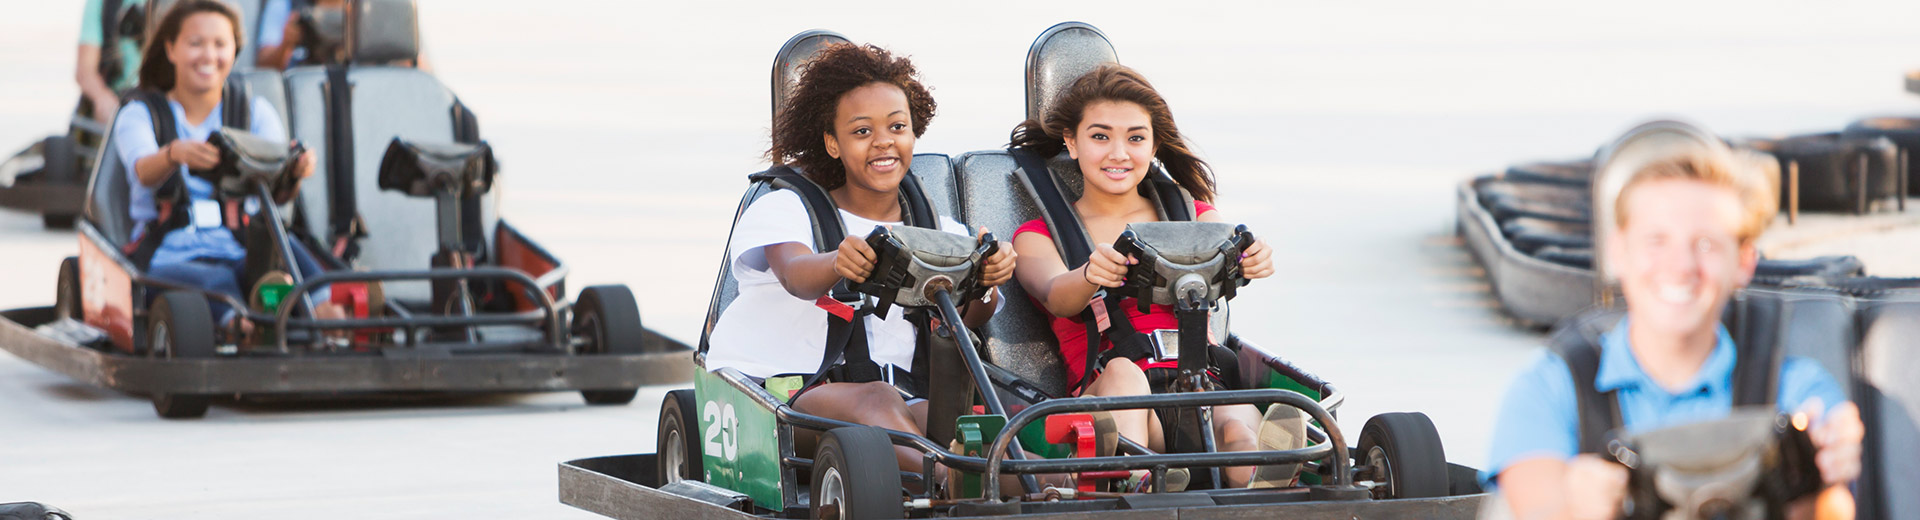 Go Karts | Adventure Landing Family Entertainment Centers & Water Parks